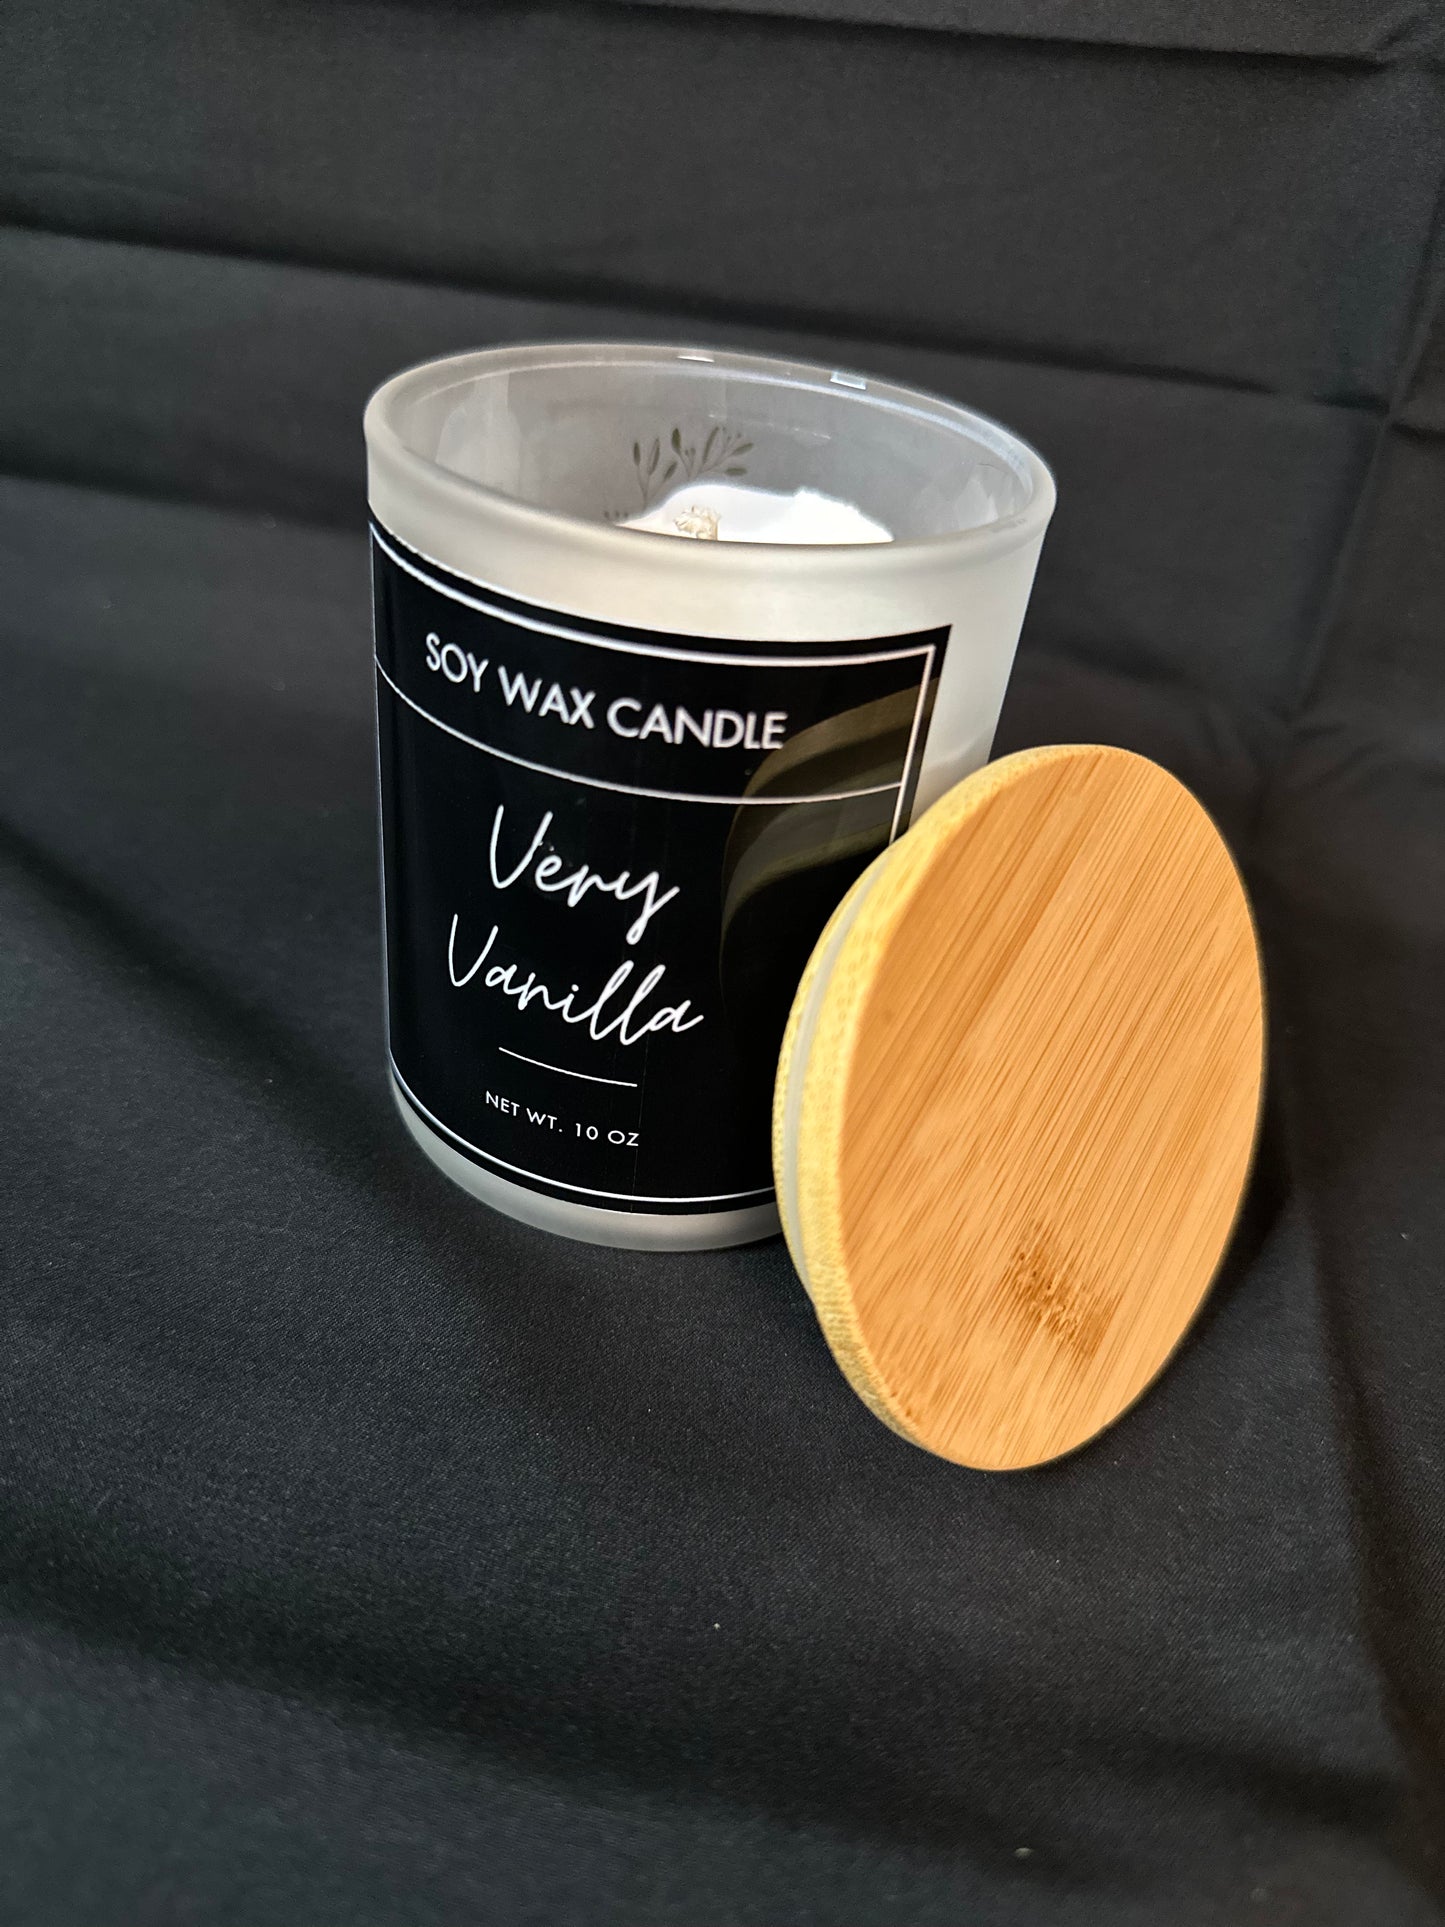 Very Vanilla candle